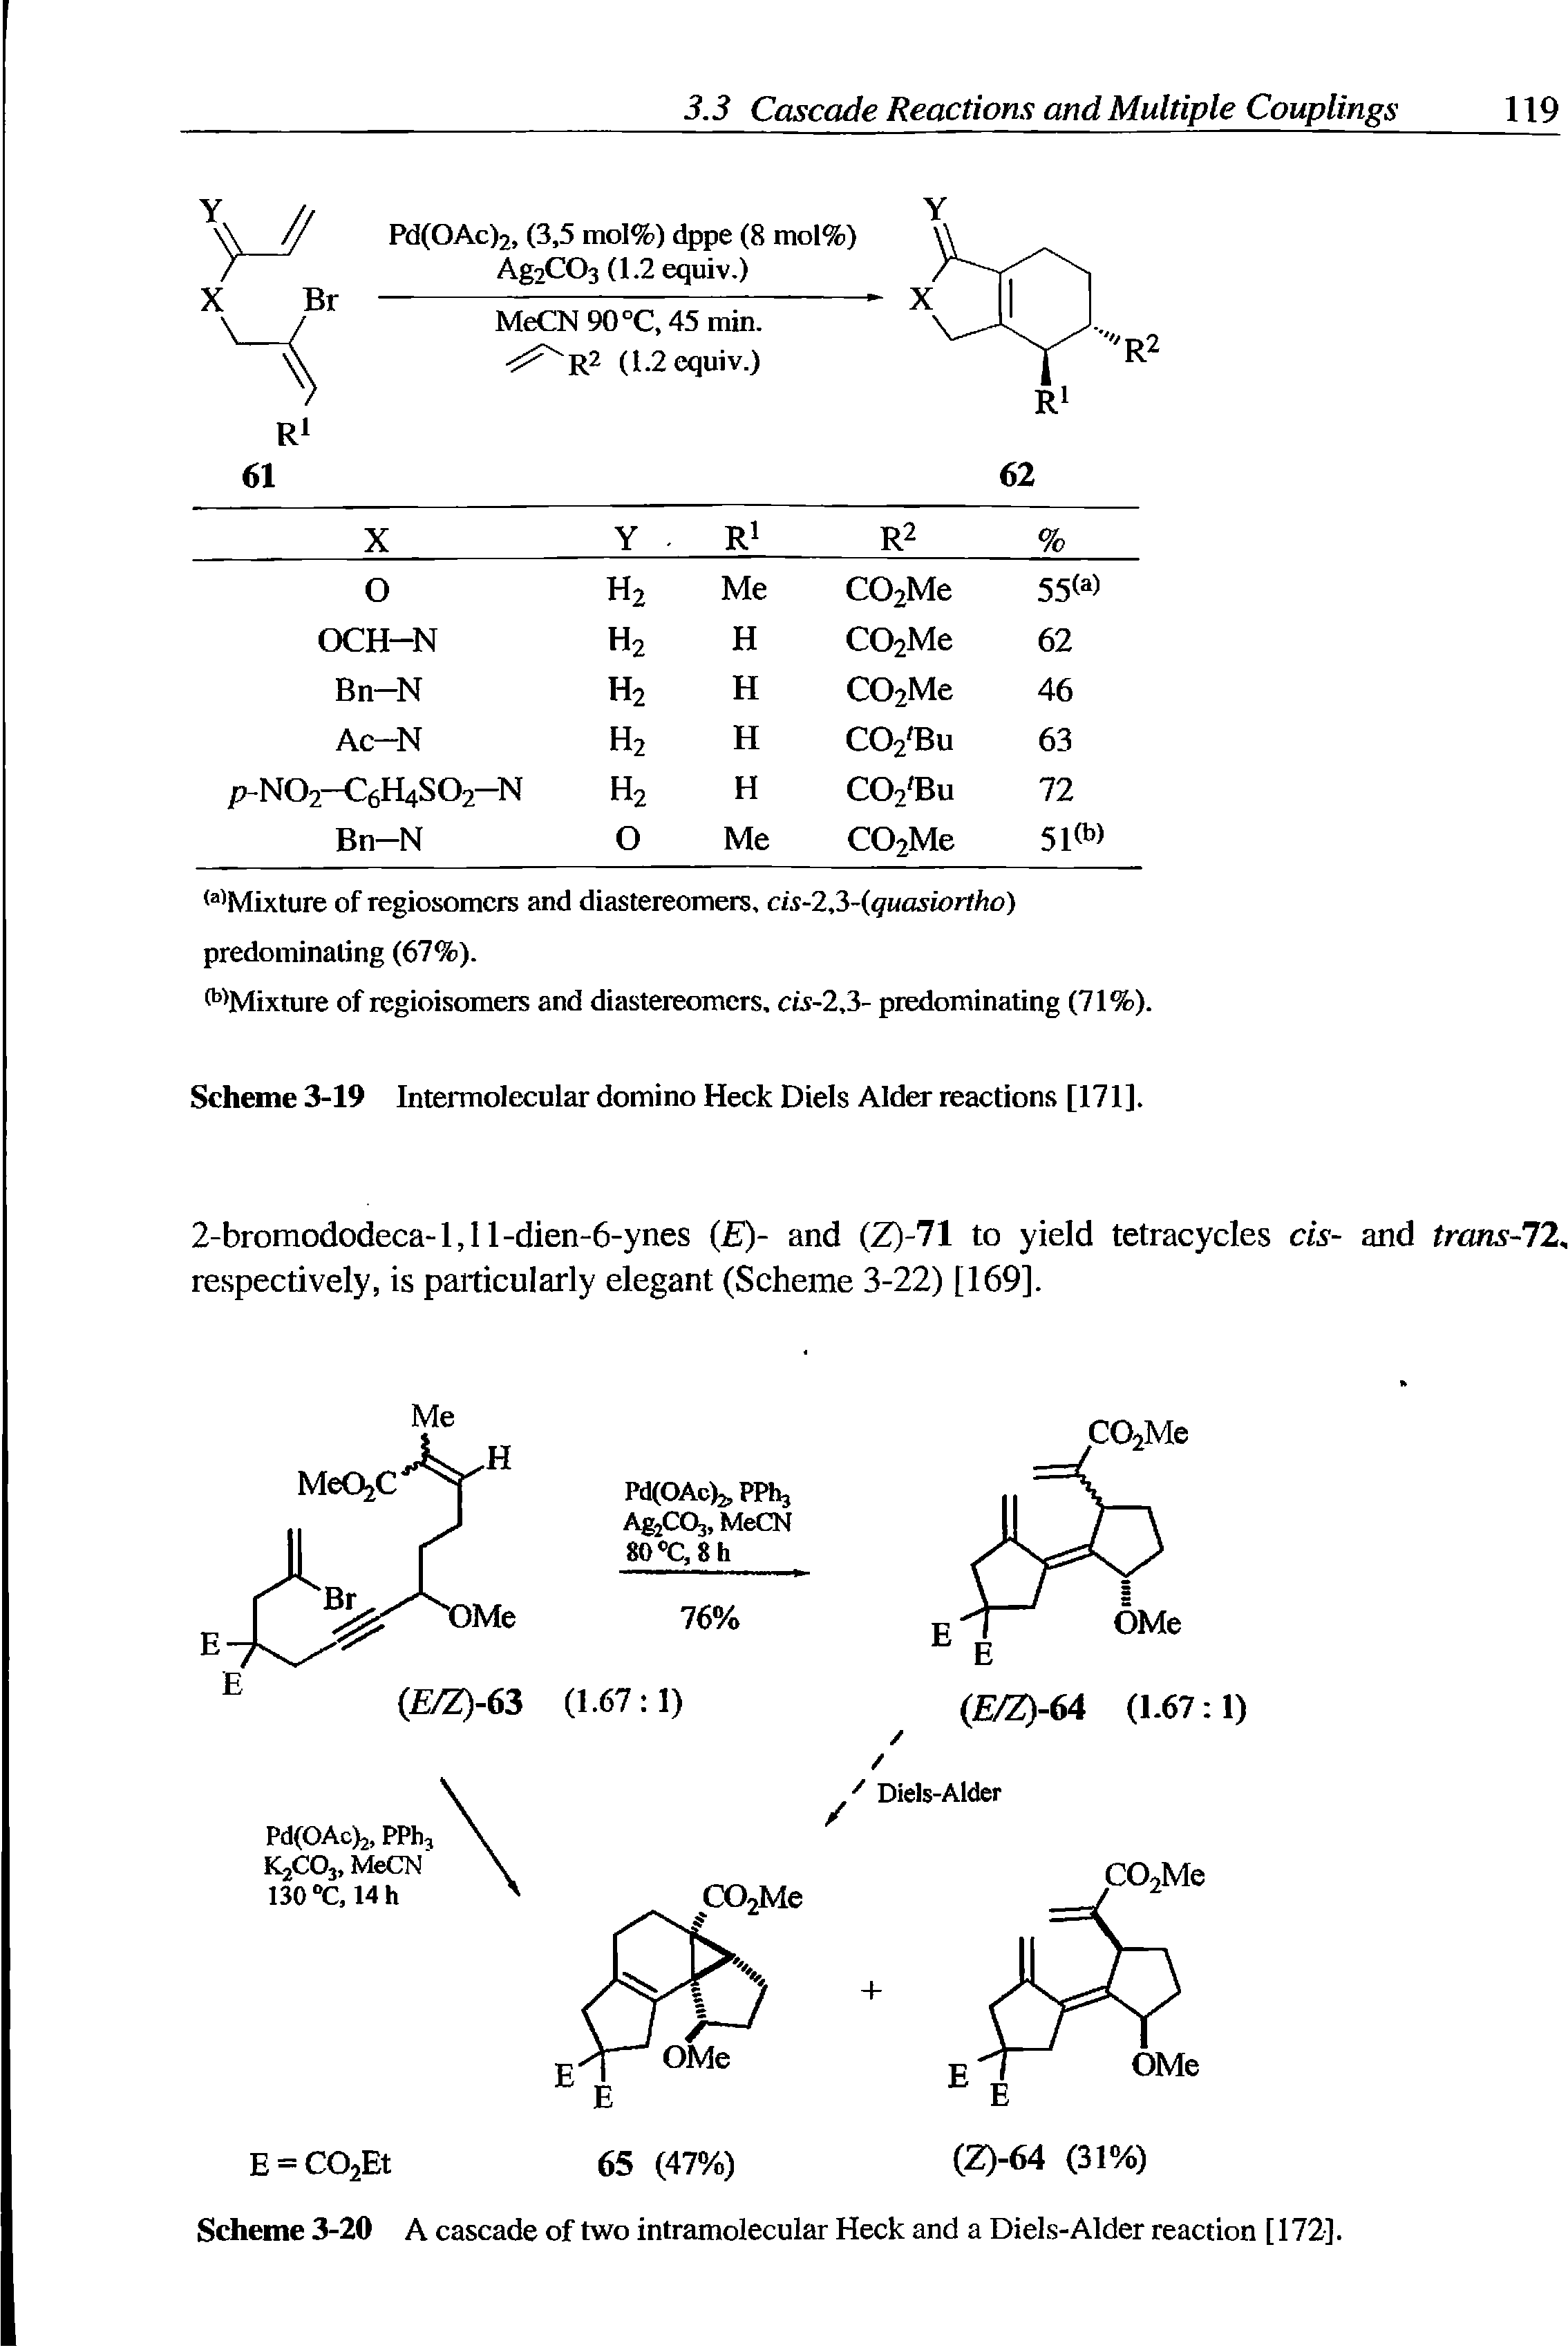 Scheme 3-20 A cascade of two intramolecular Heck and a Diels-Alder reaction [172].